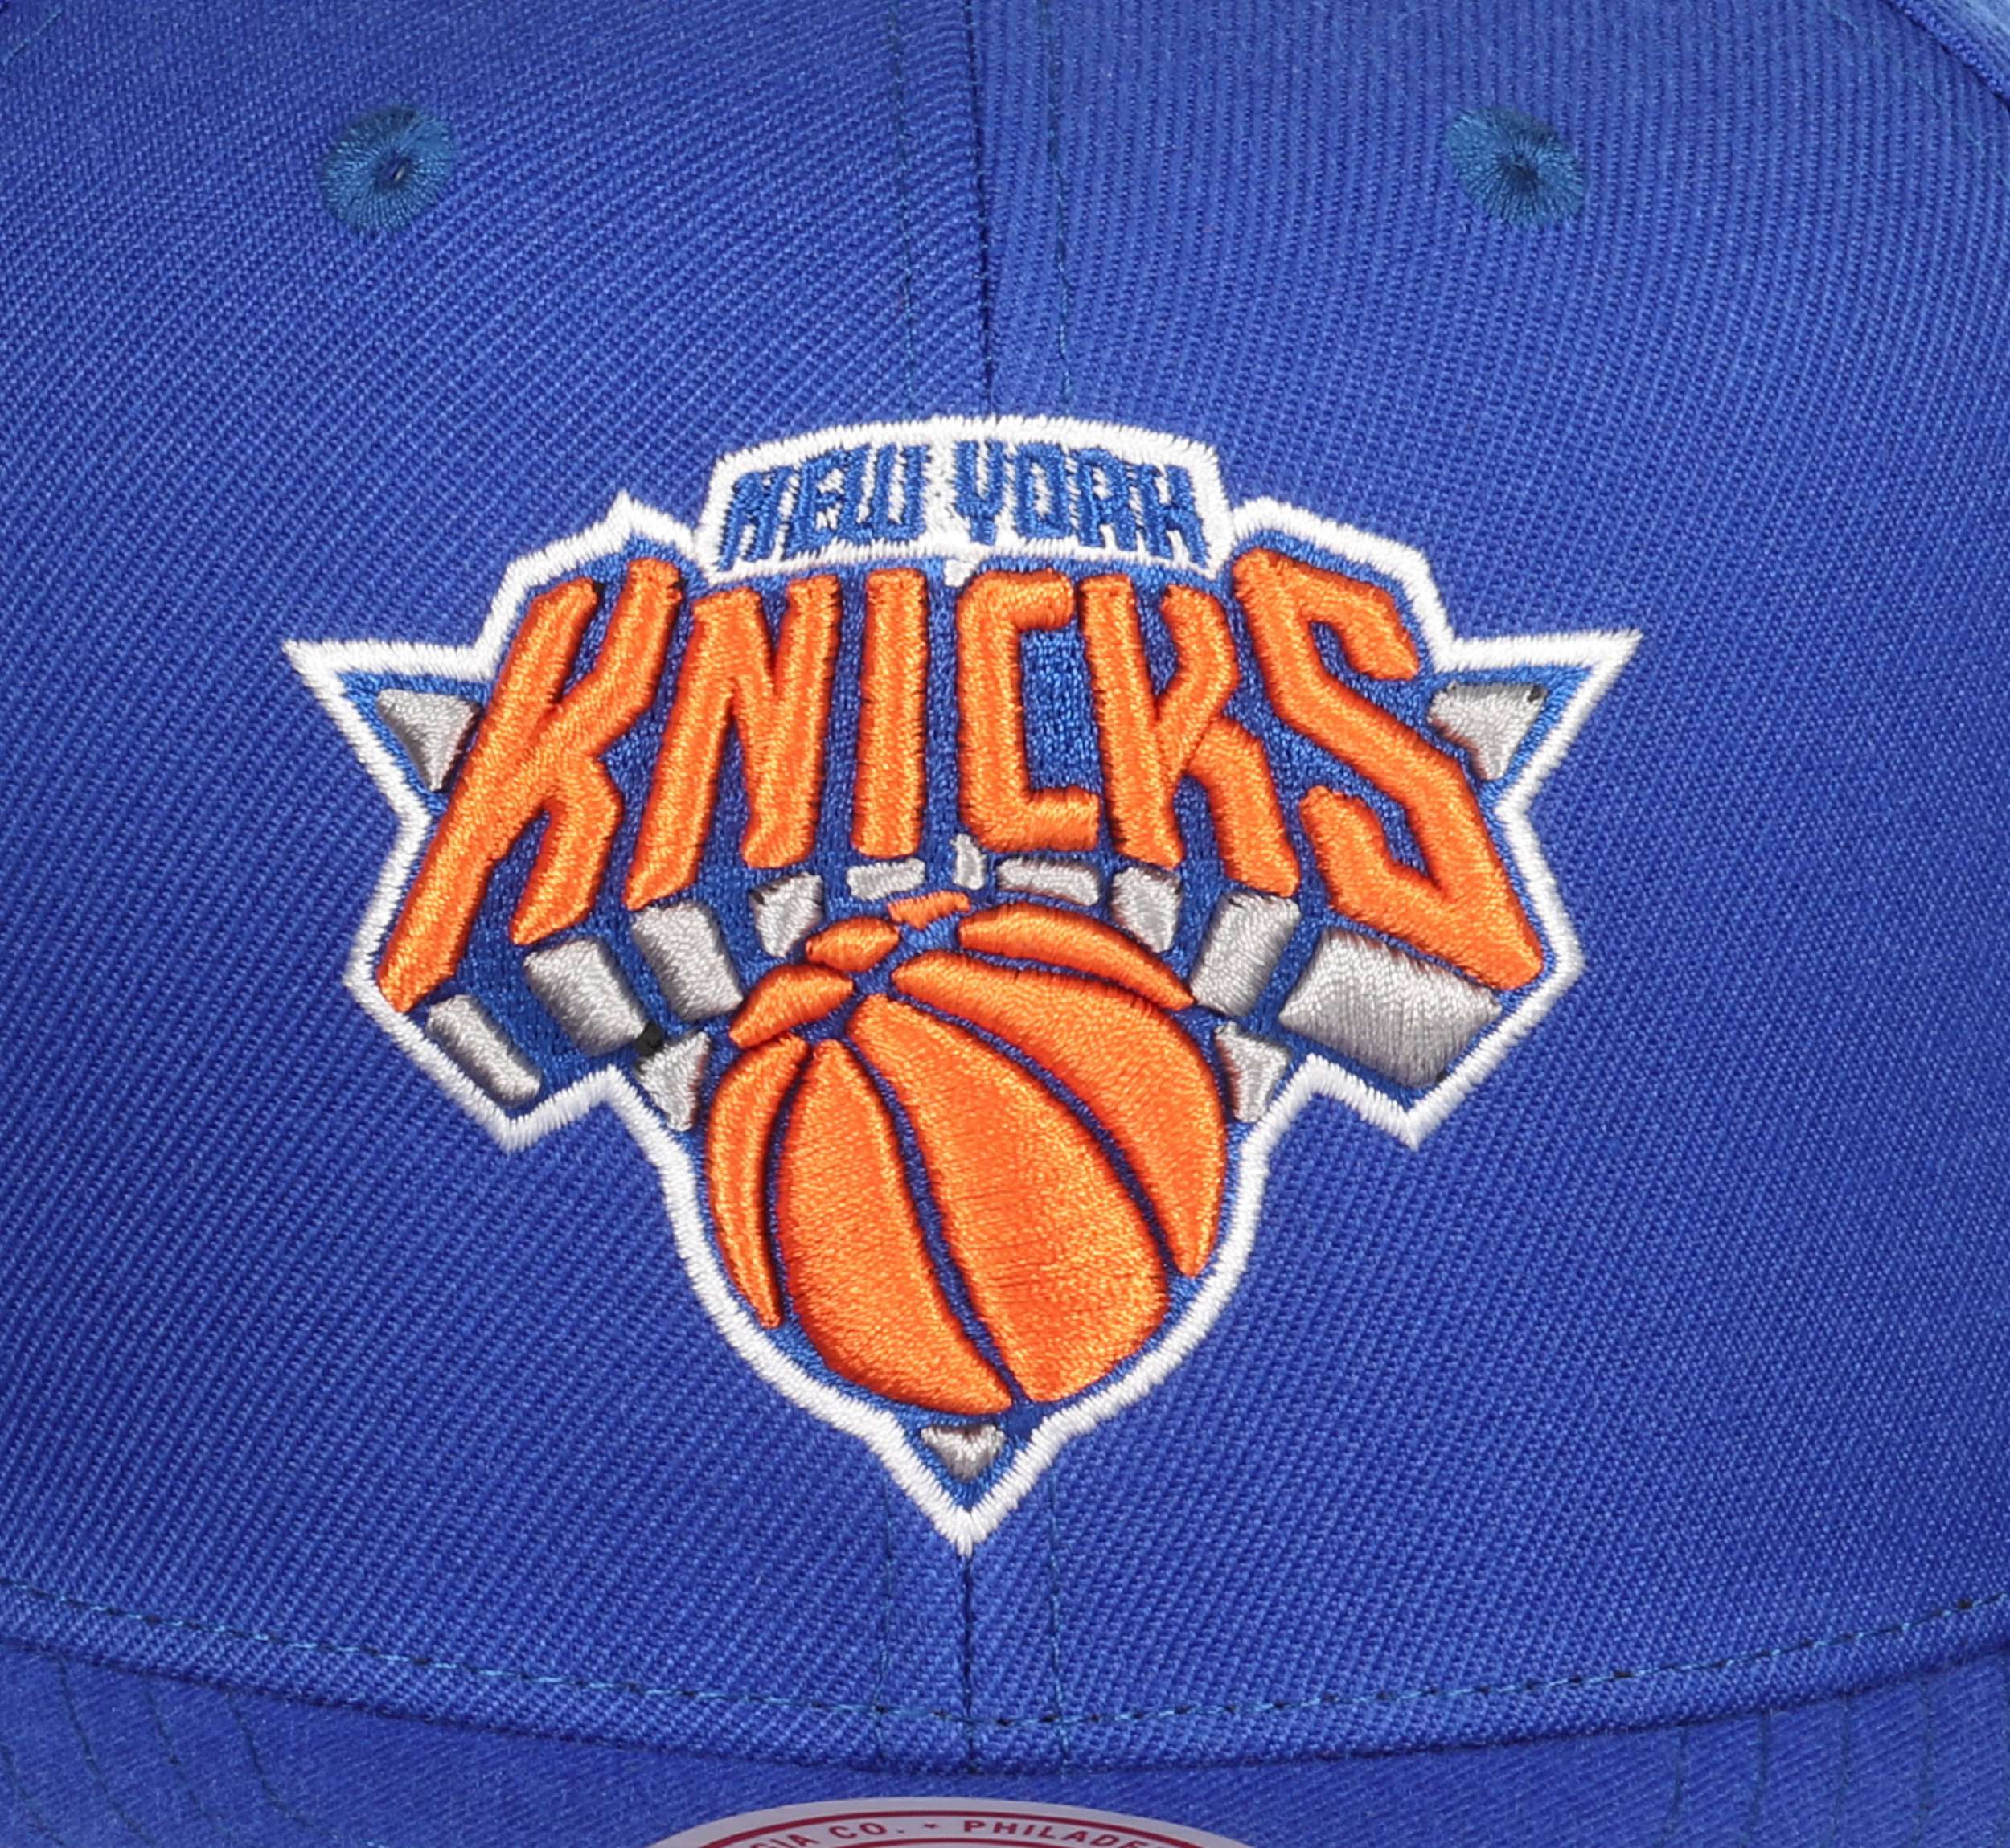 New York Knicks NBA Team Ground 2.0 Original Fit Blau Verstellbare Snapback Cap Mitchell & Ness